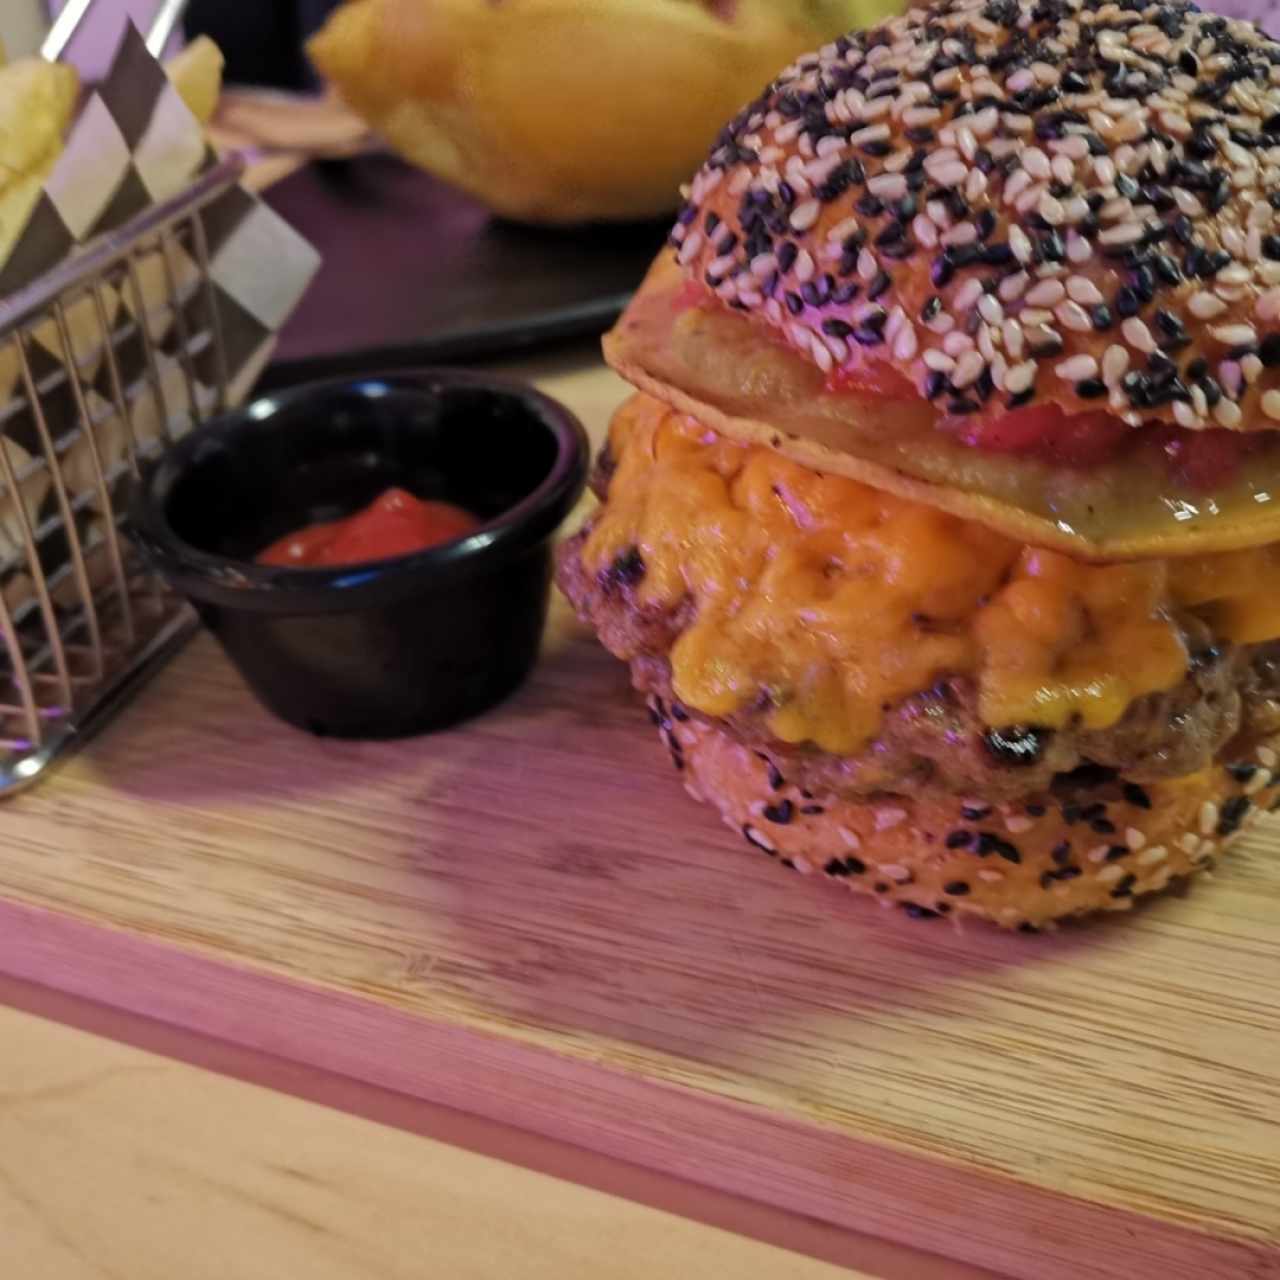 Frida burger 